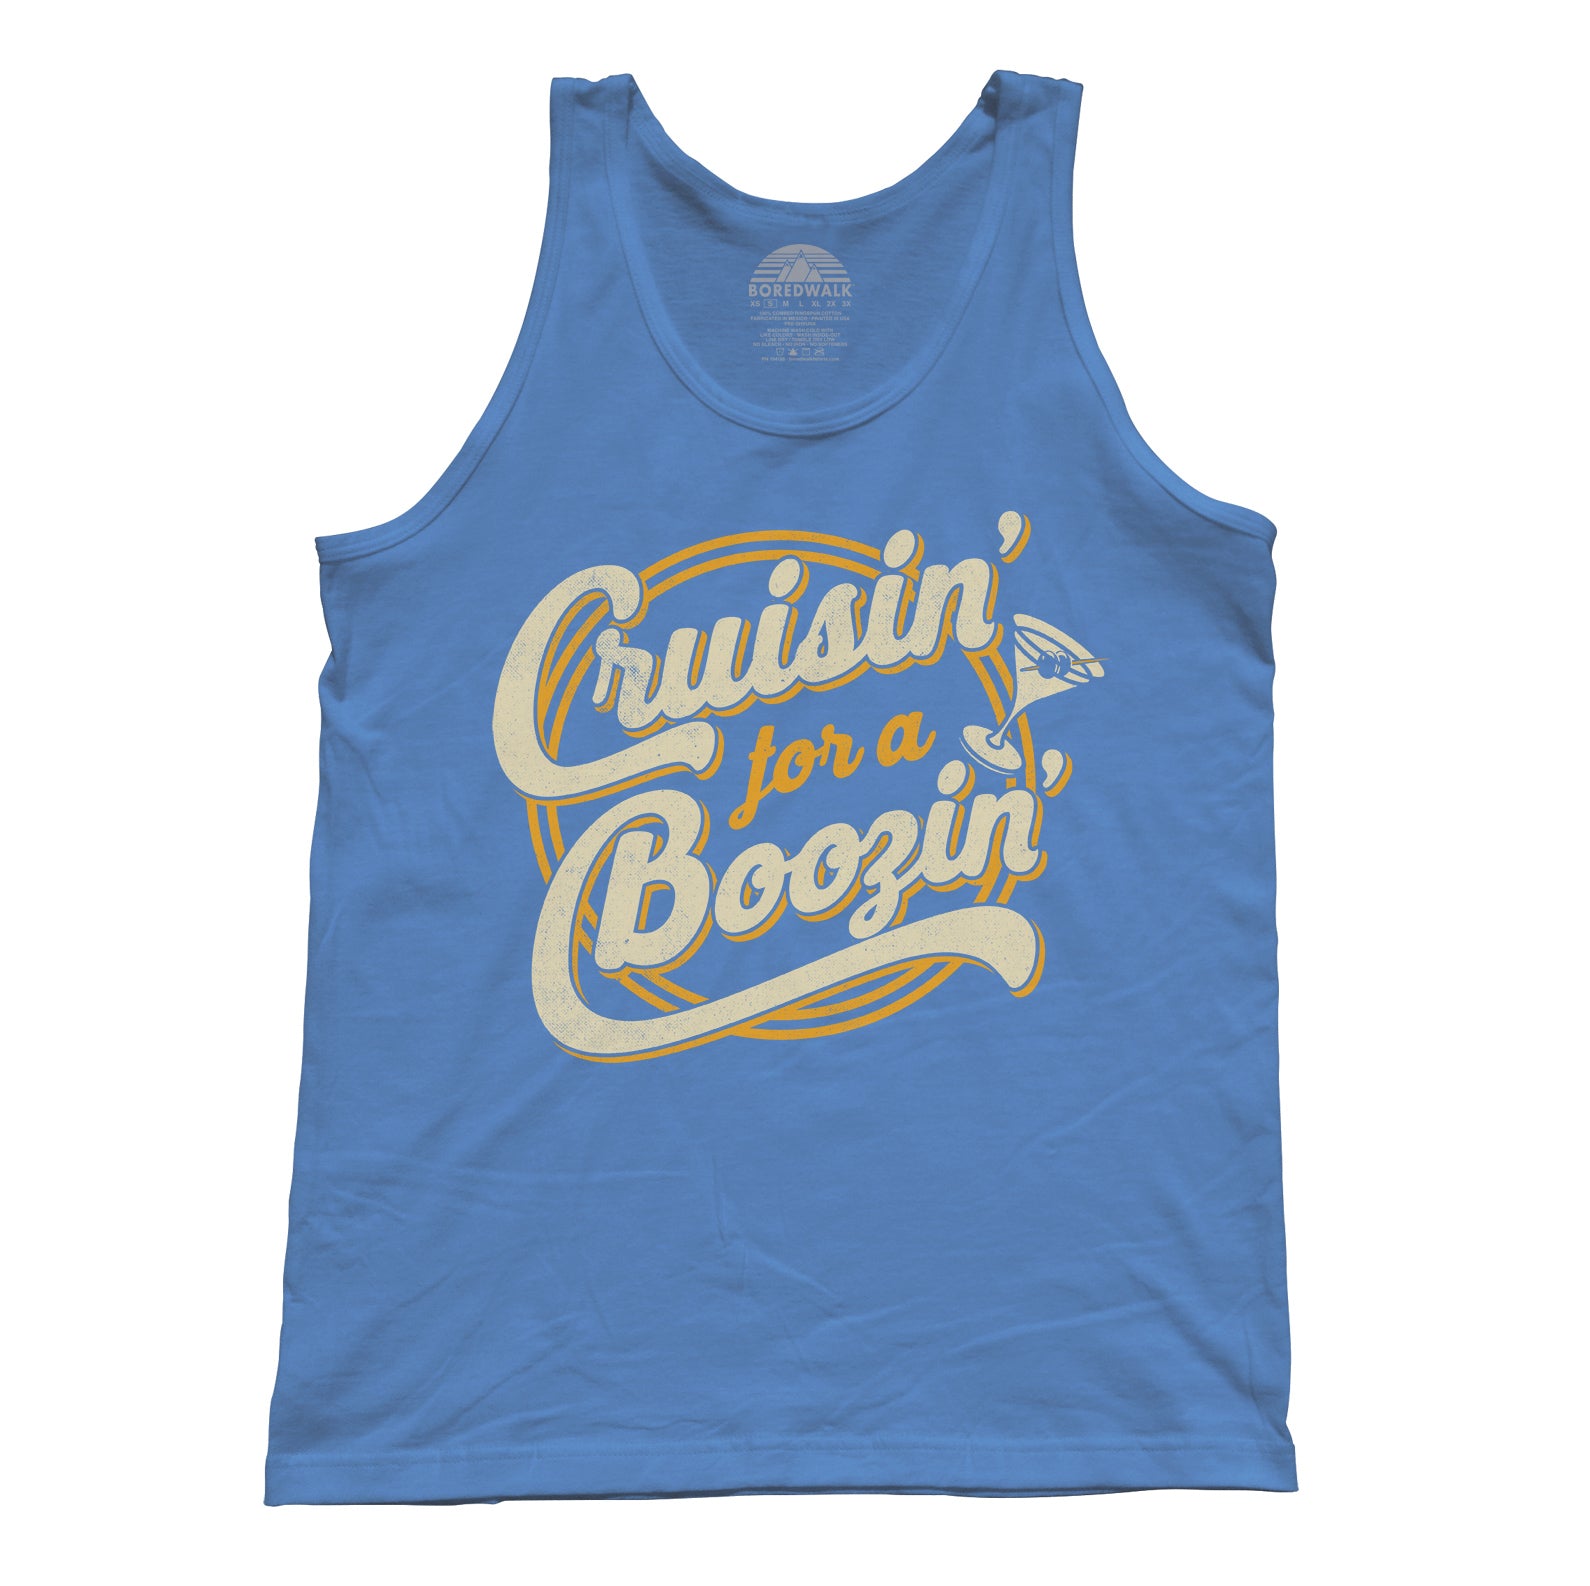 Unisex Cruisin for a Boozin Tank Top - Funny Drinking Shirt